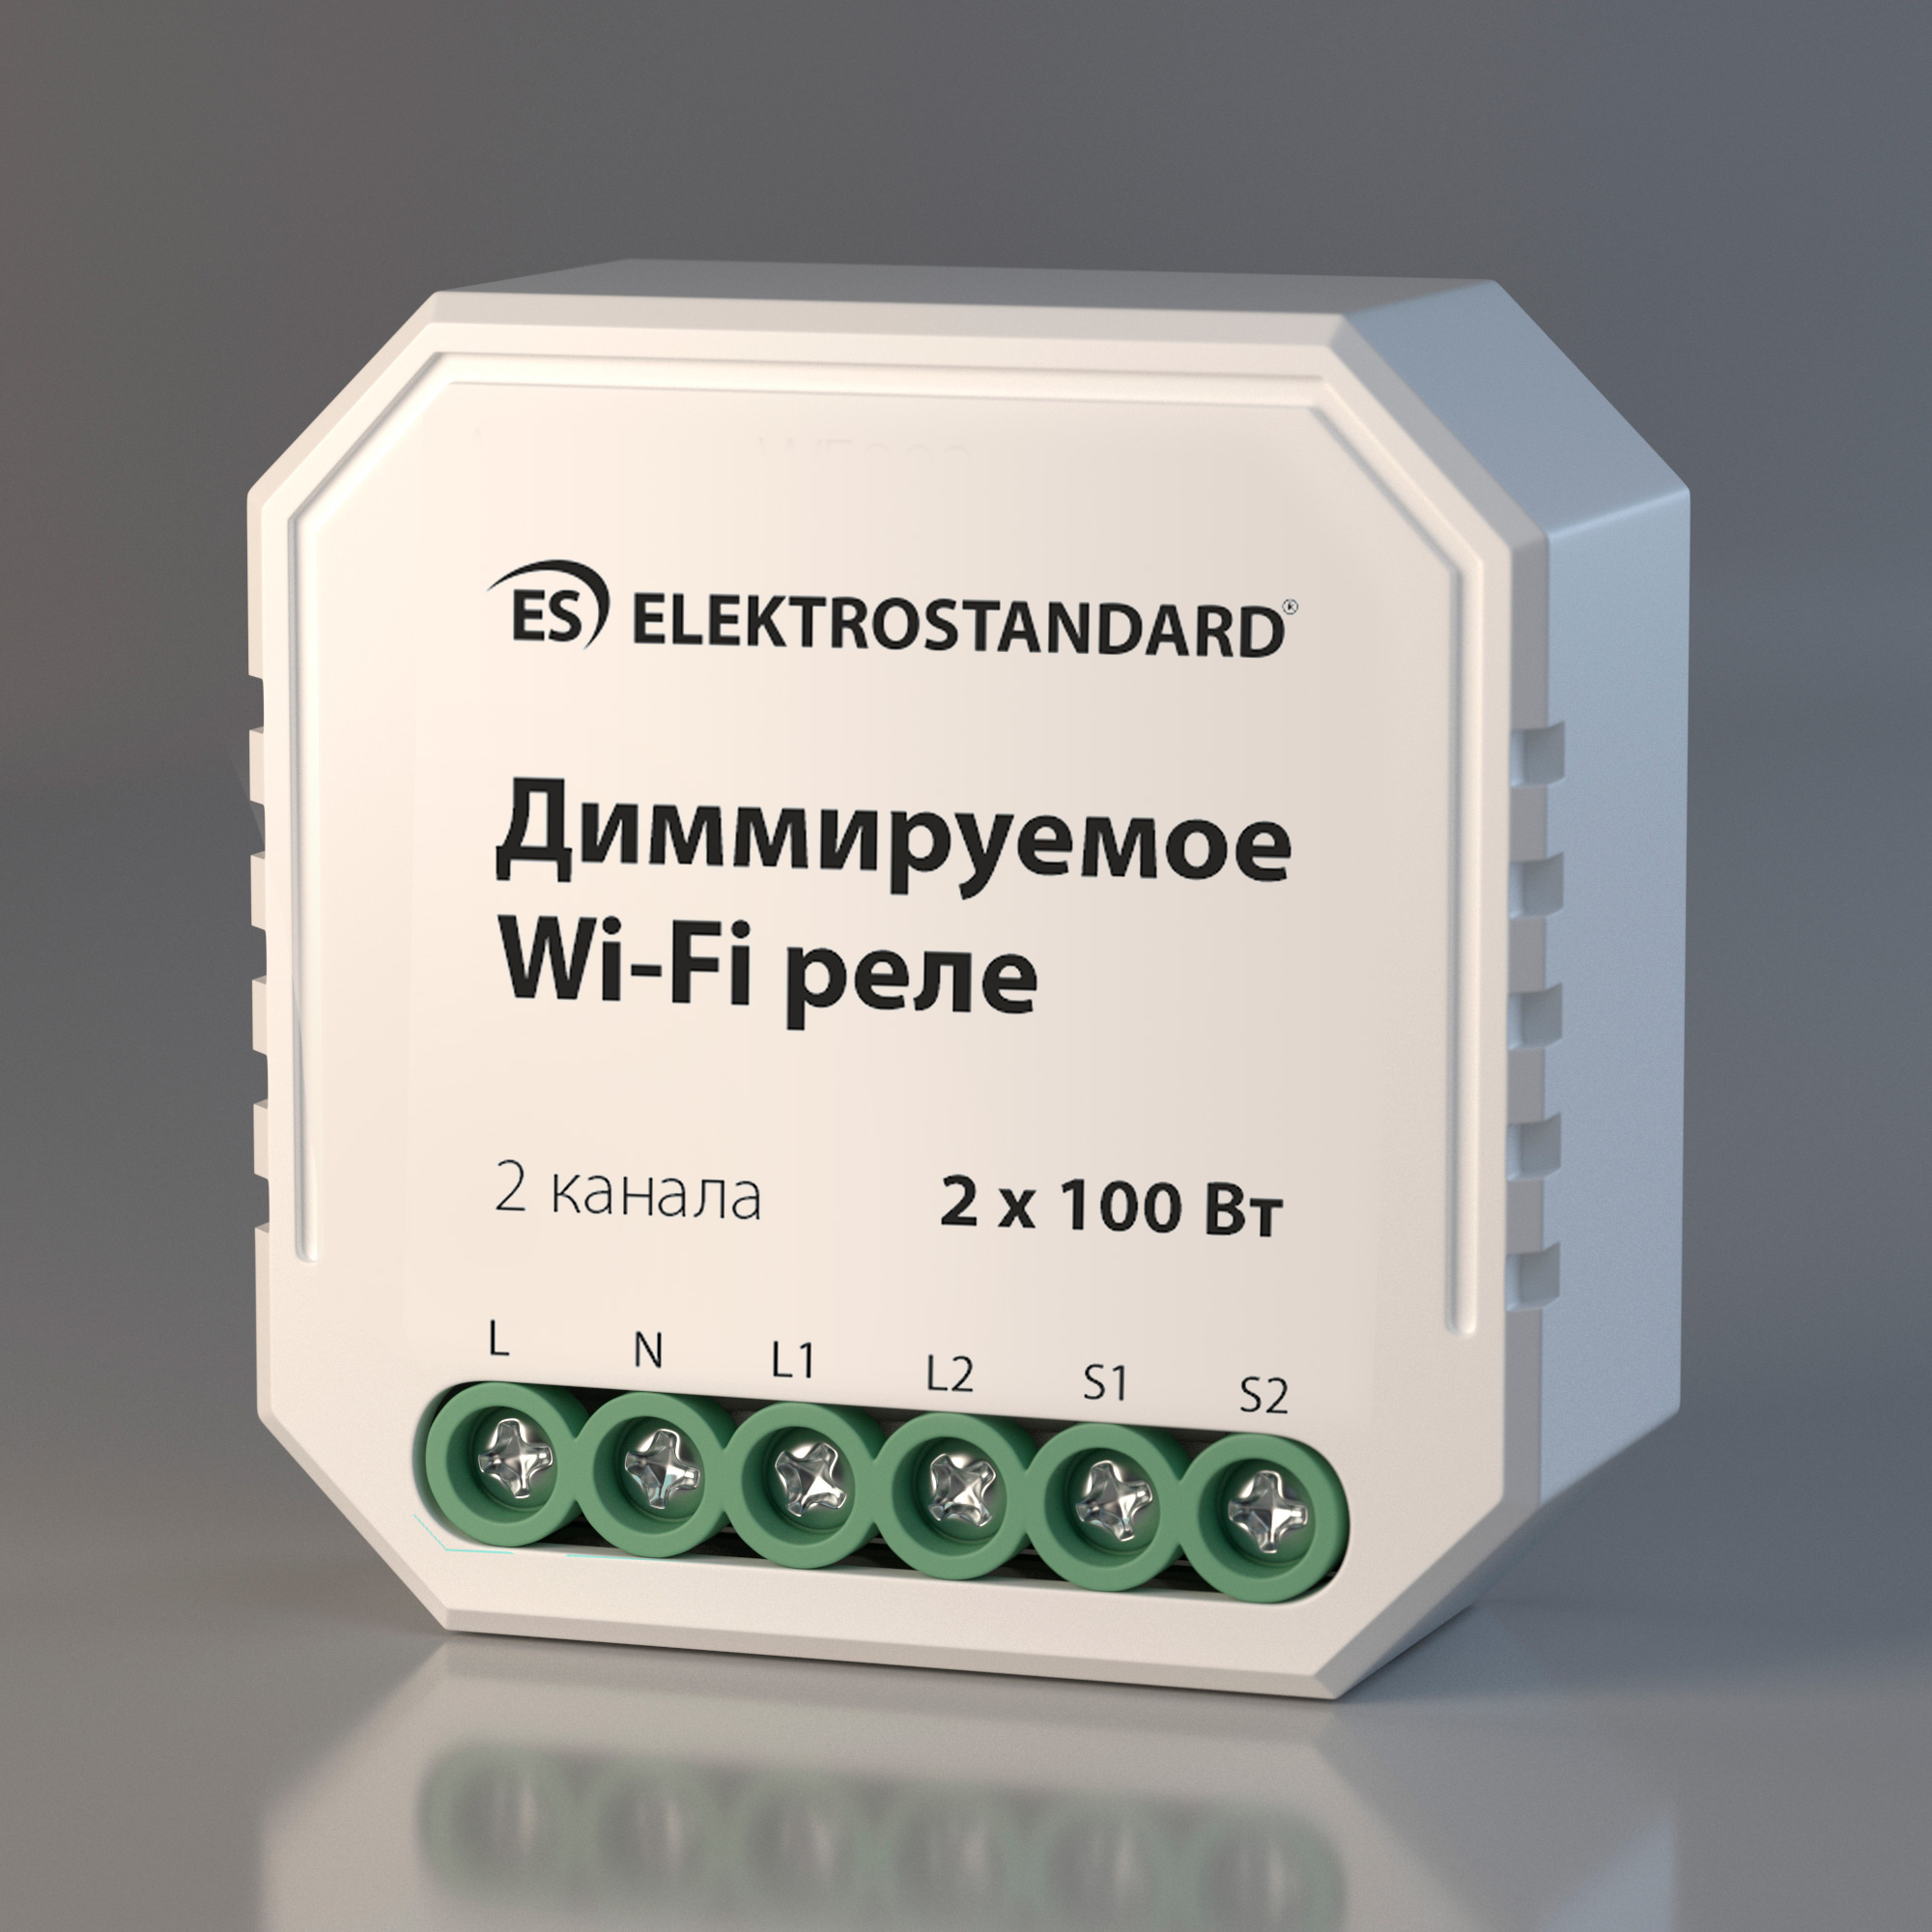 Elektrostandard 76003/00 диммируемое Wi-Fi реле